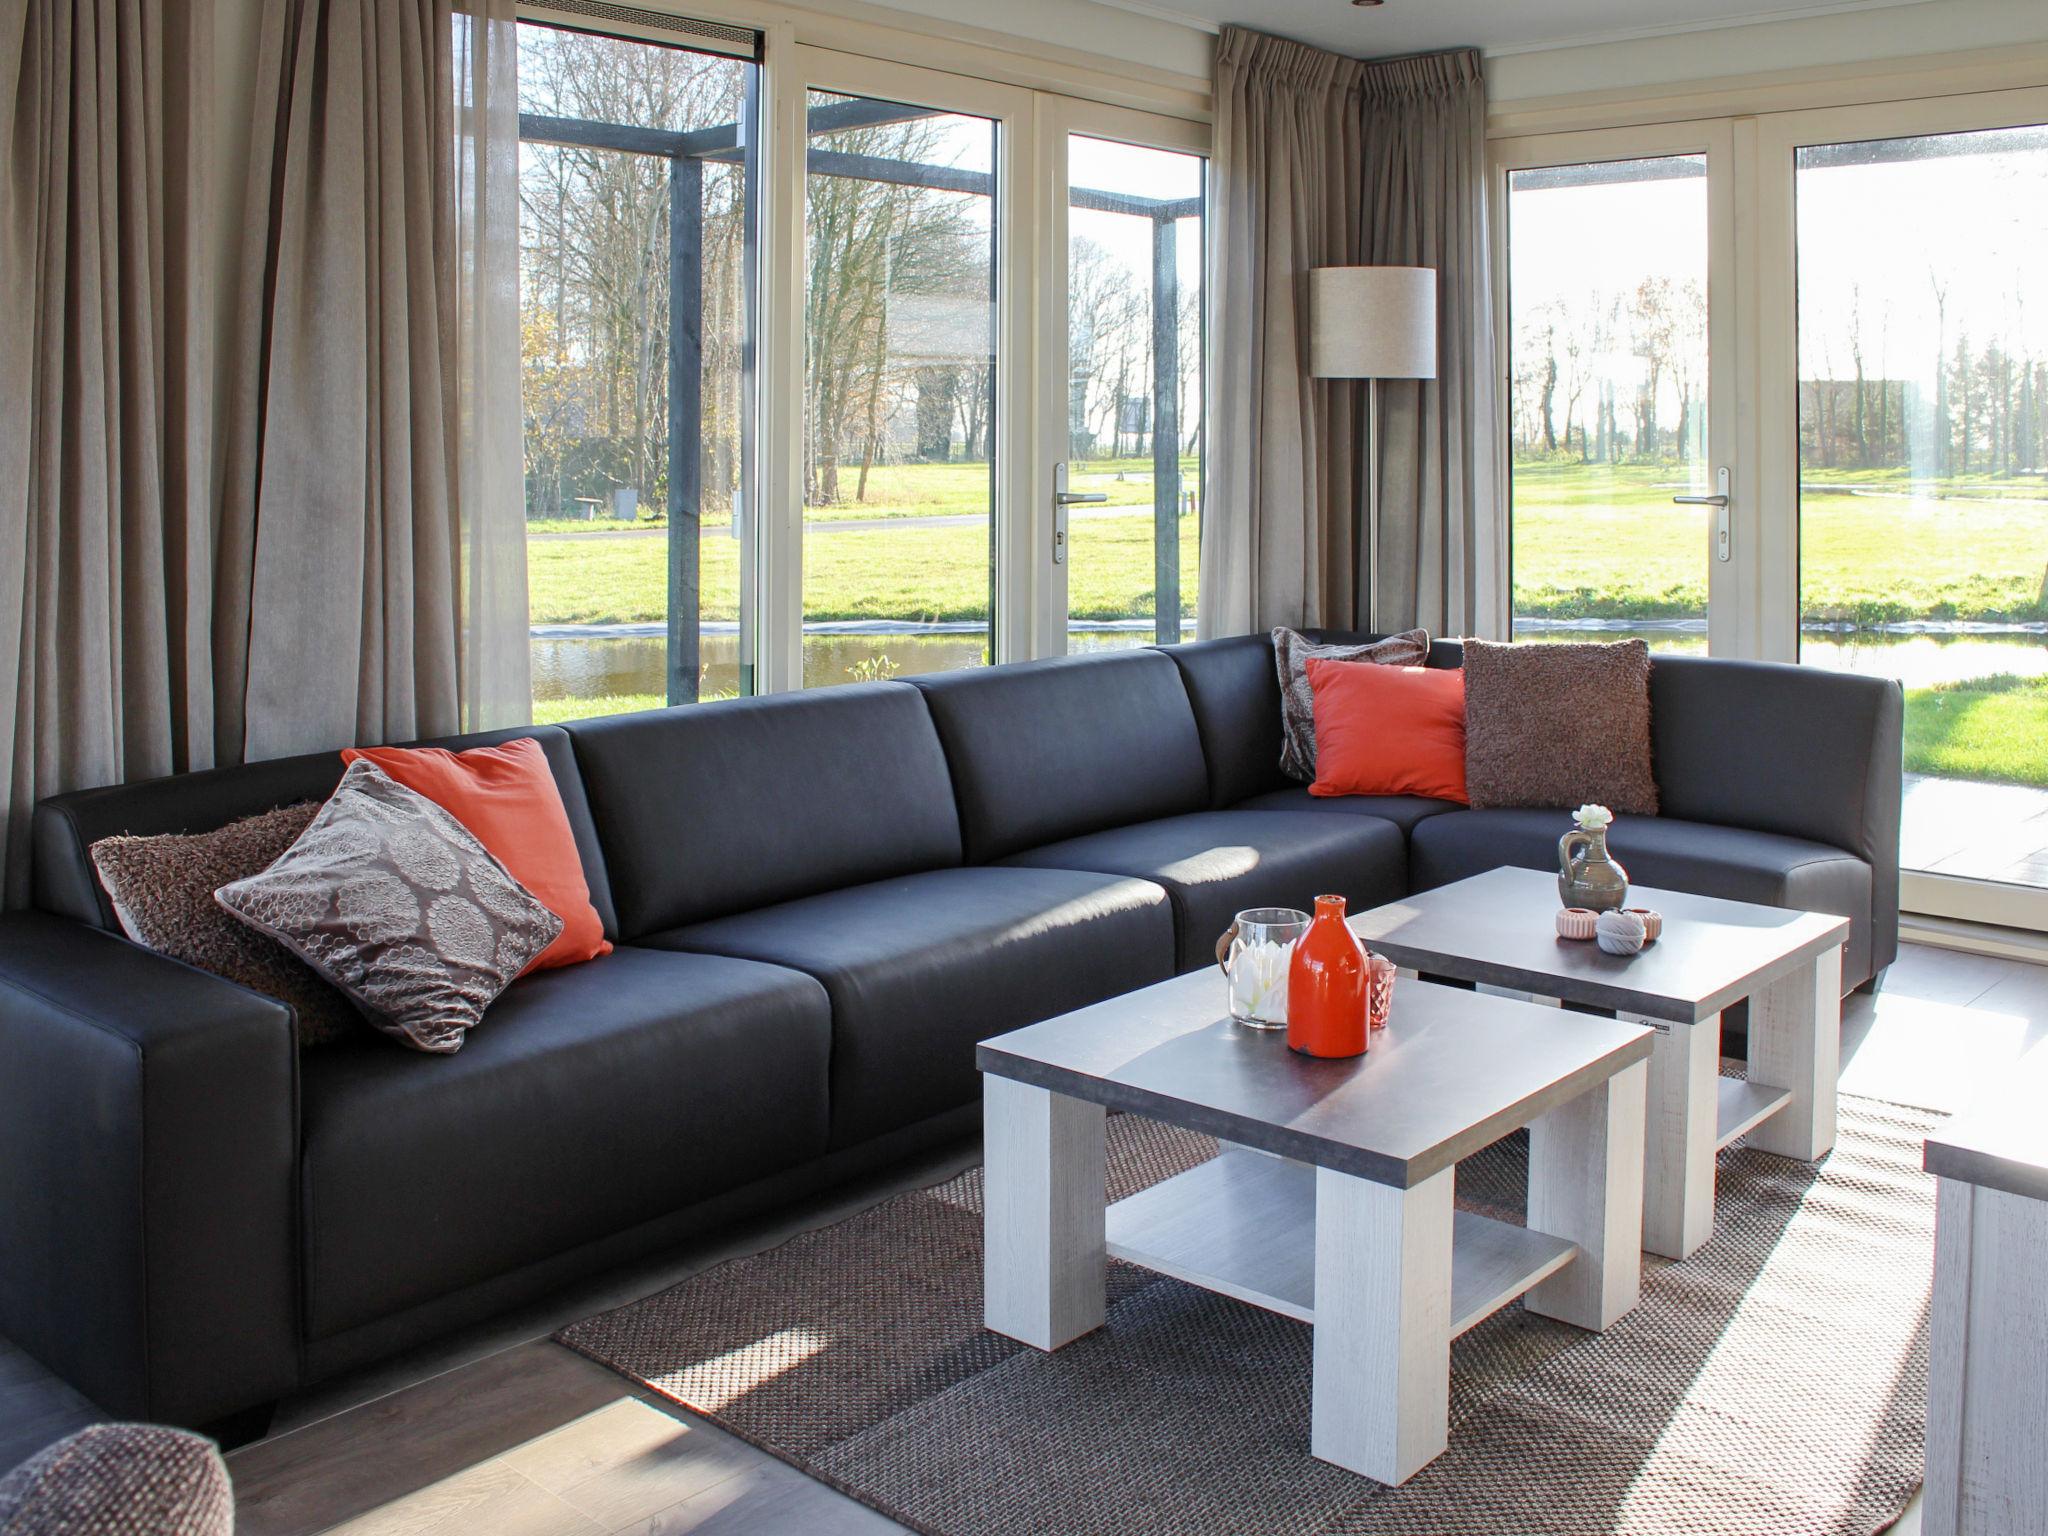 Photo 2 - 5 bedroom House in West-Graftdijk with terrace